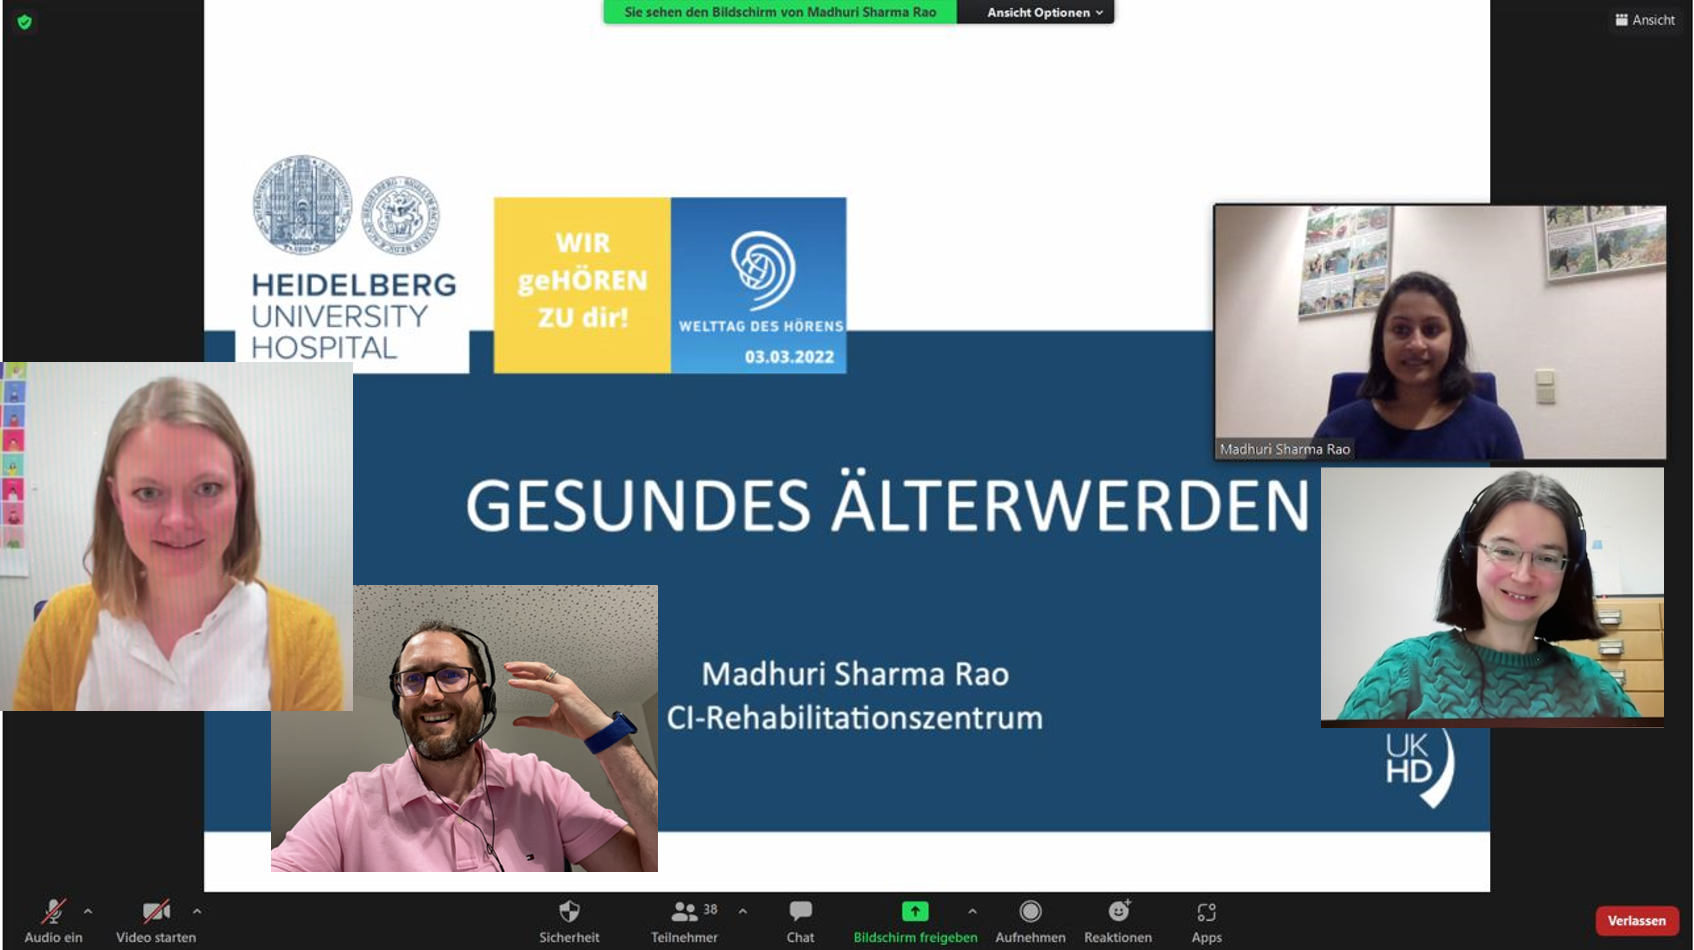 Bildschirmfoto des Online-Seminars in Heidelberg